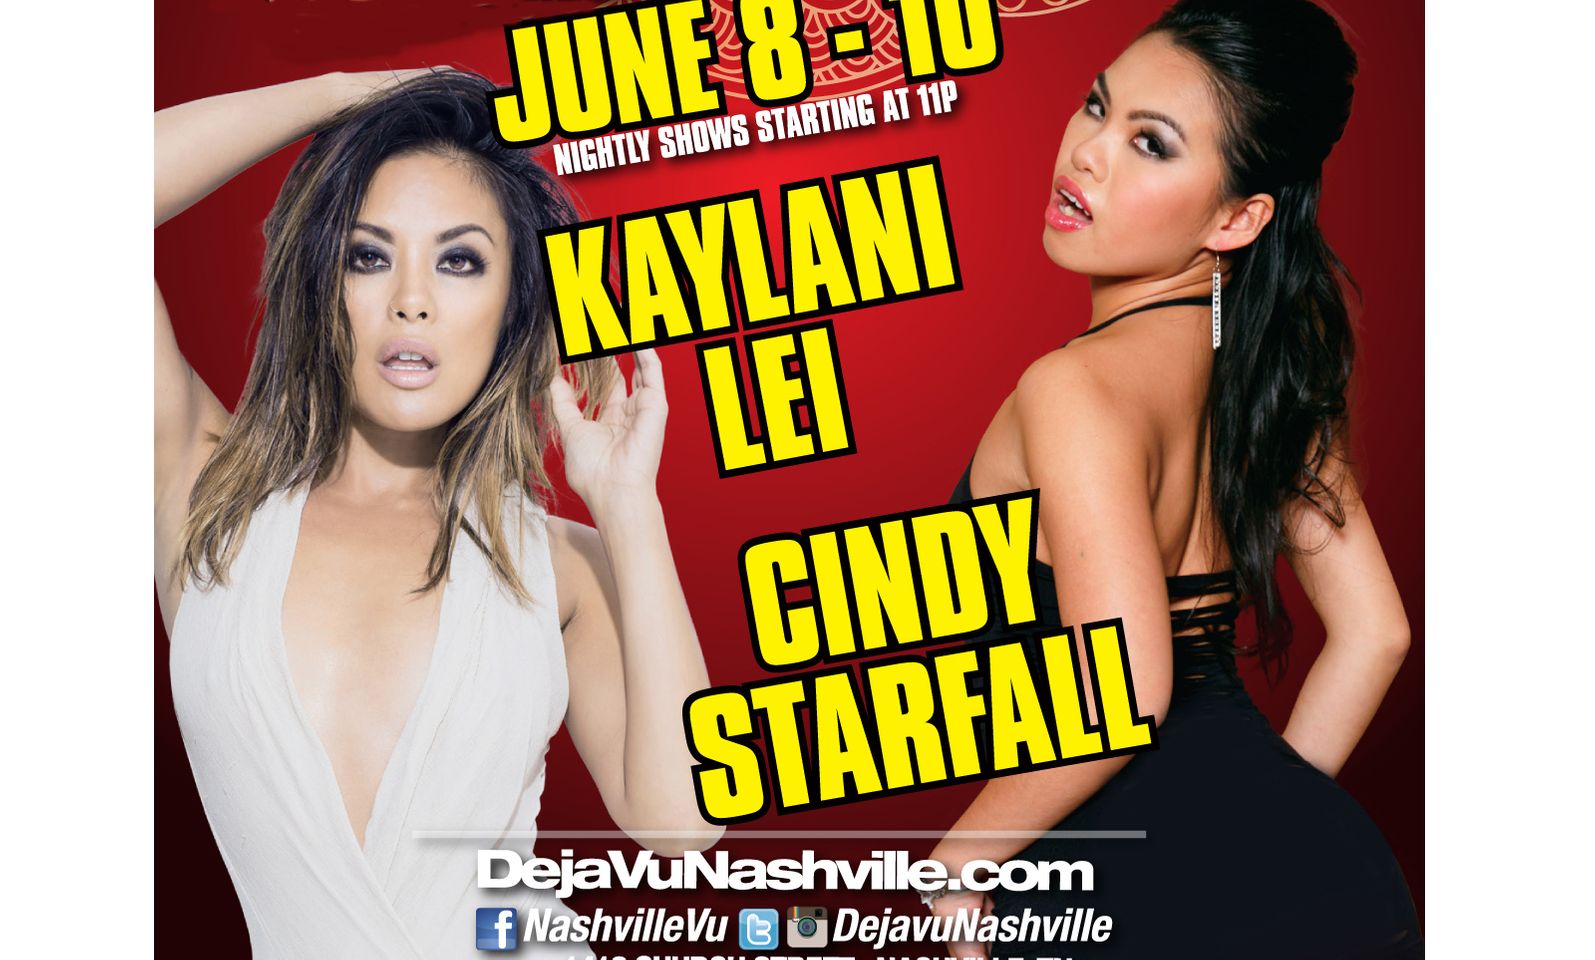 Cindy Starfall and Kaylani Lei Co-Headline at Deja Vu Showgirls